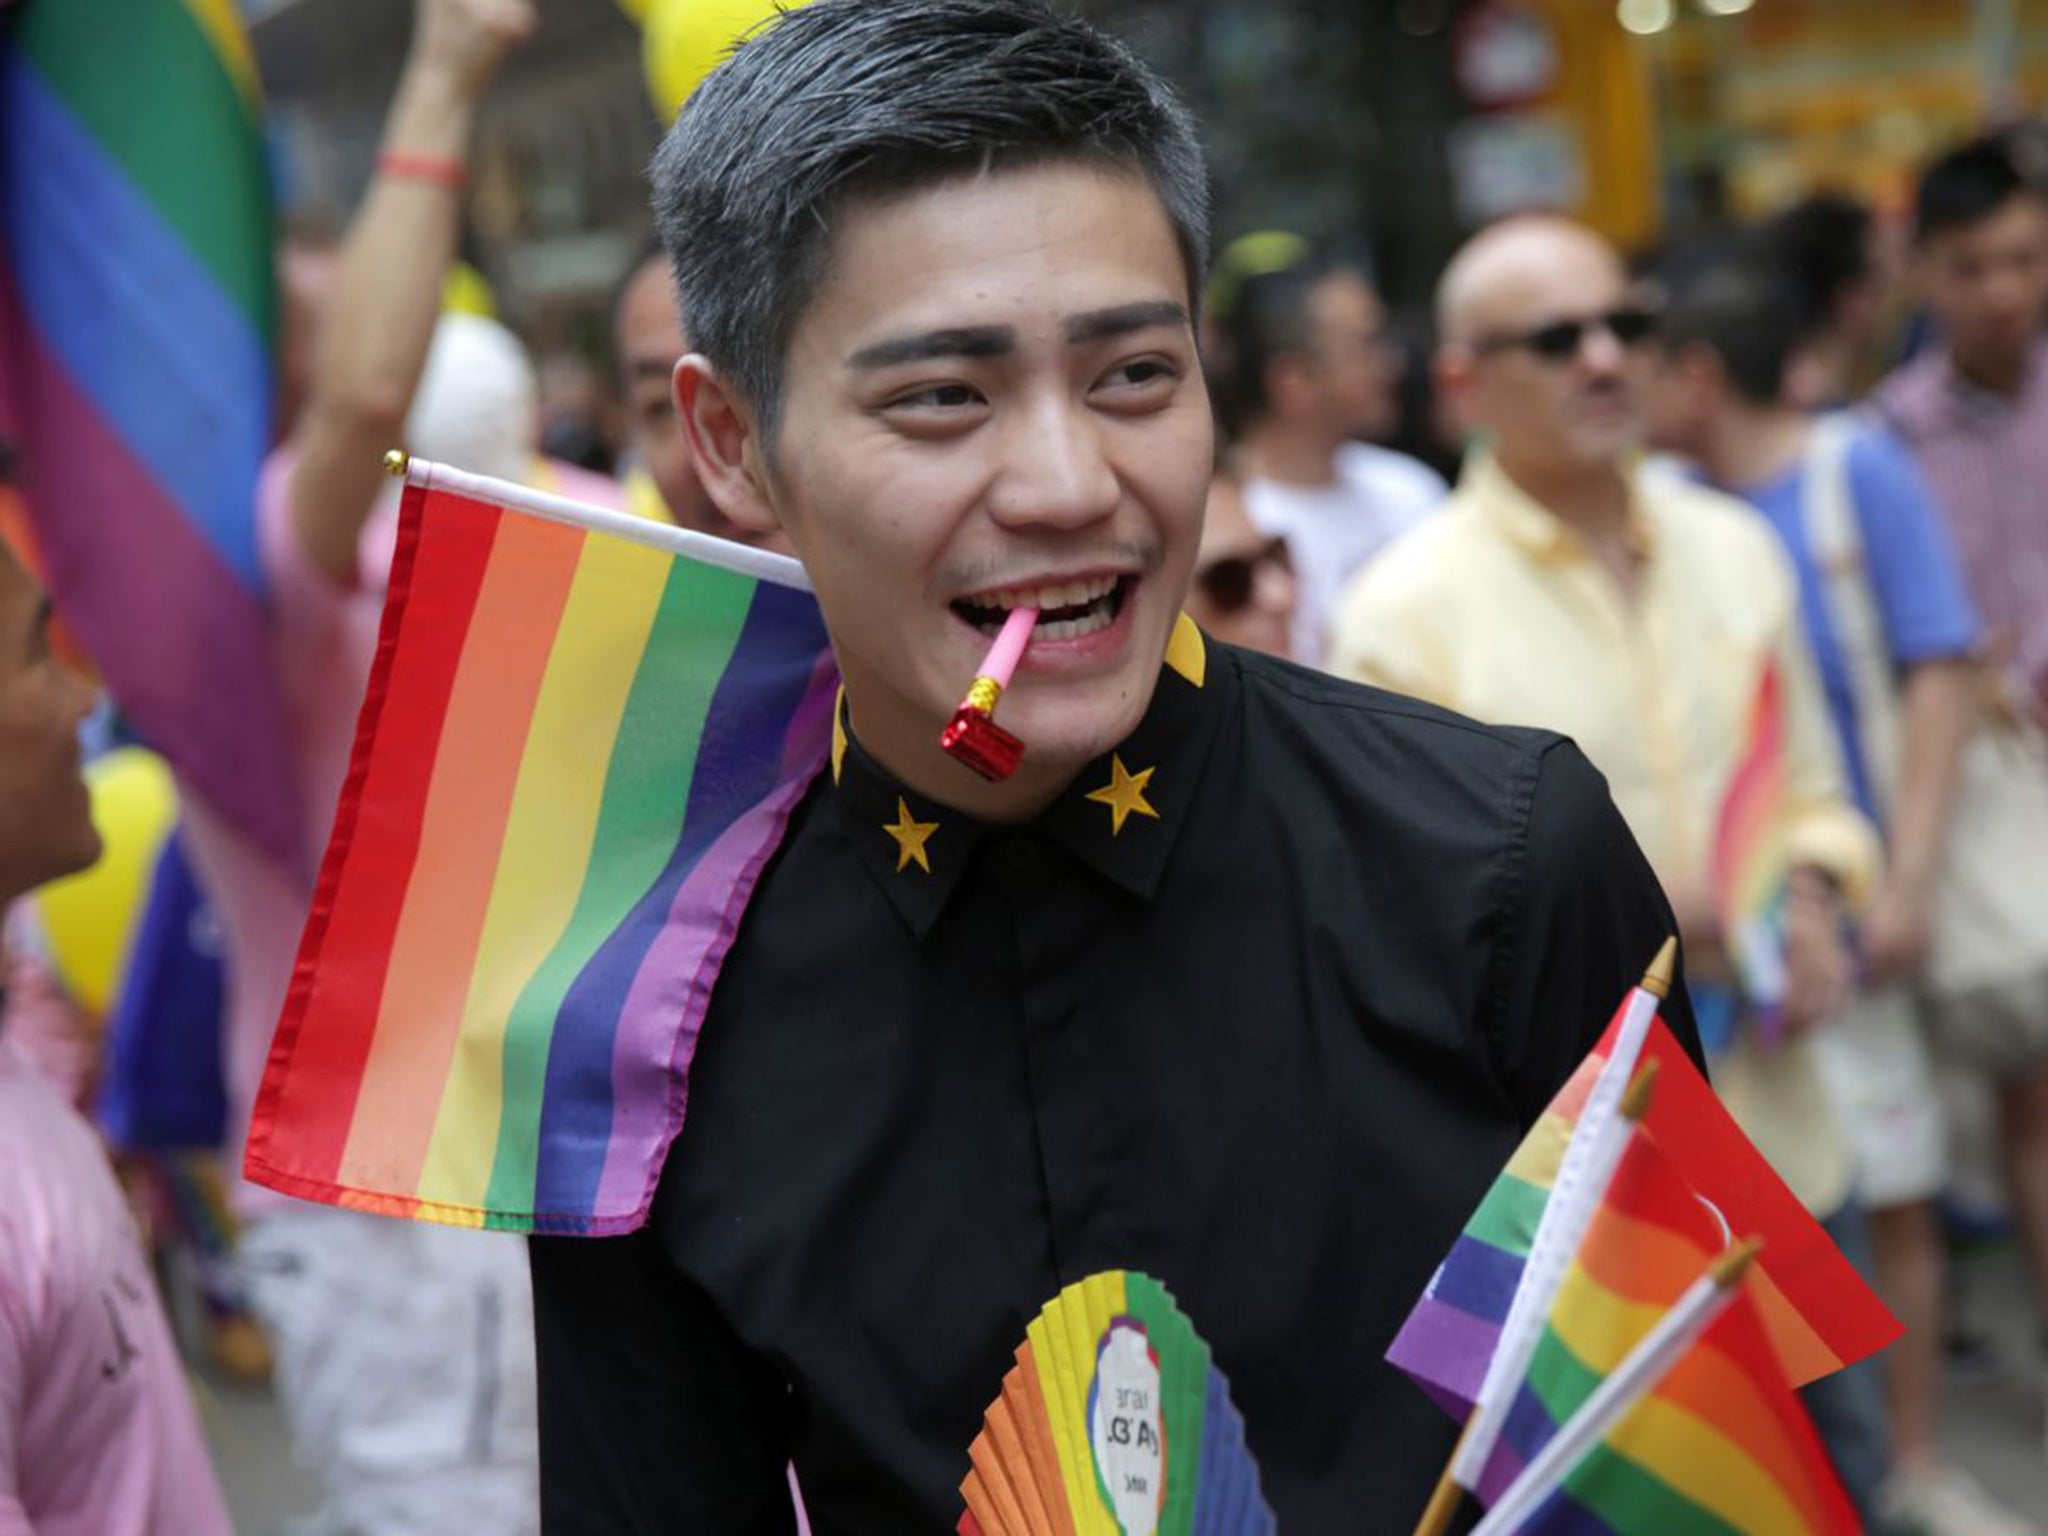 People take part in the Lesbian, Gay, Bi-sexual and Transgender (LGBT) parade in Hong Kong on November 6, 2015.